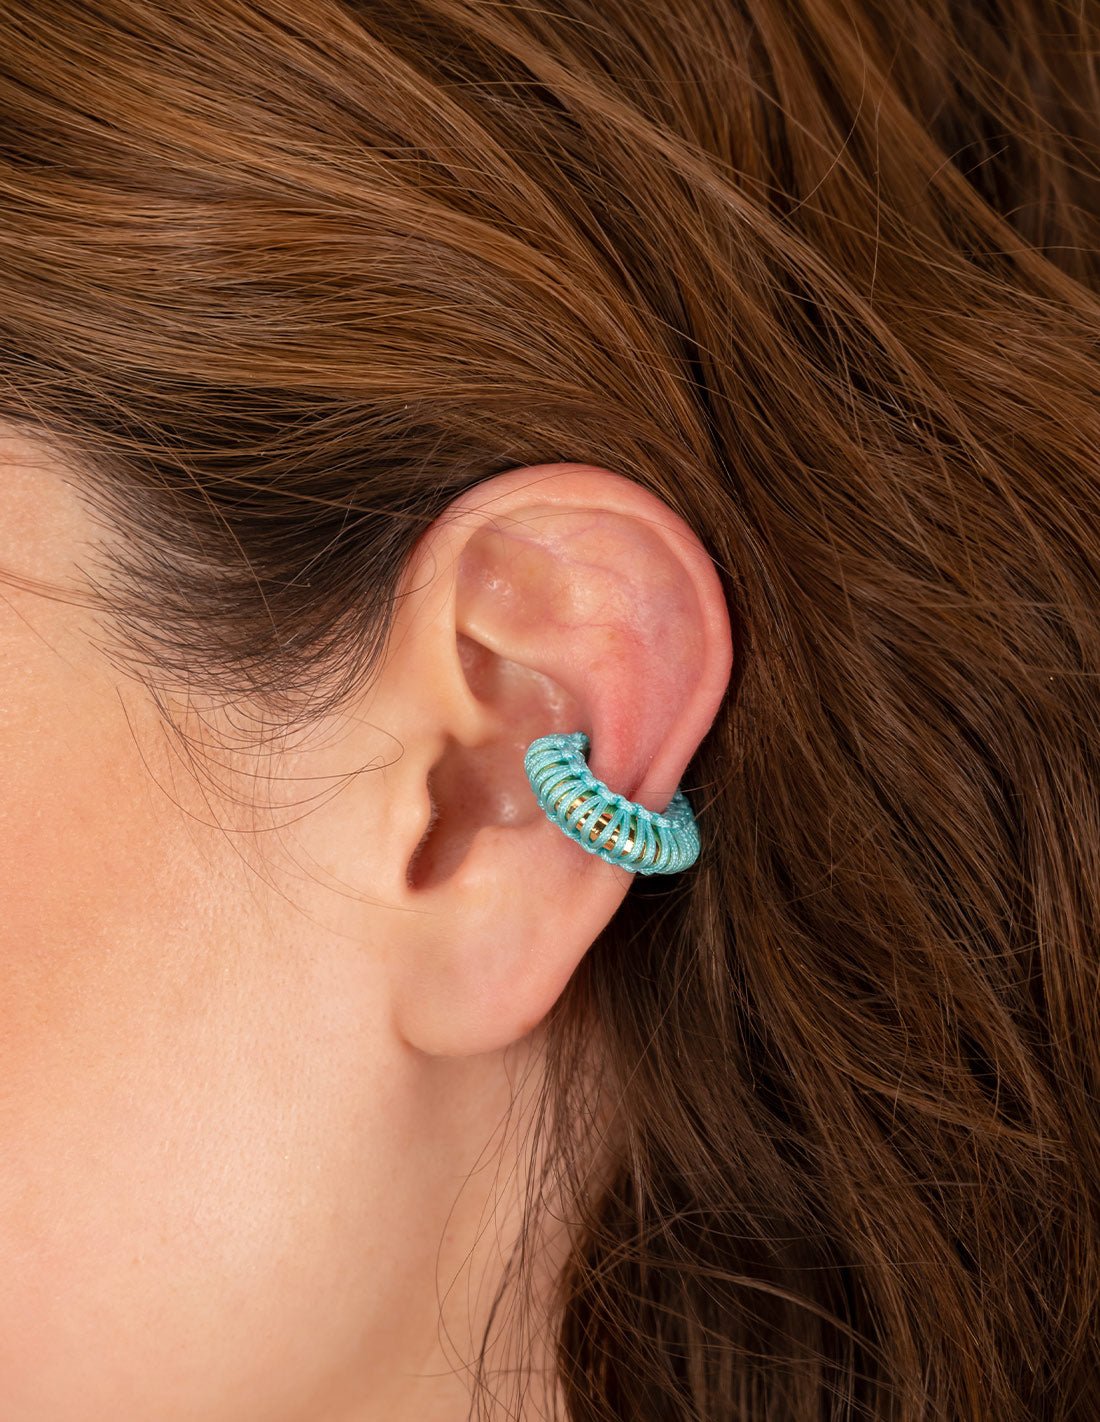 Luna Llena Ear Cuff Turquoise - Ear Cuff - Entreaguas Wearable Art